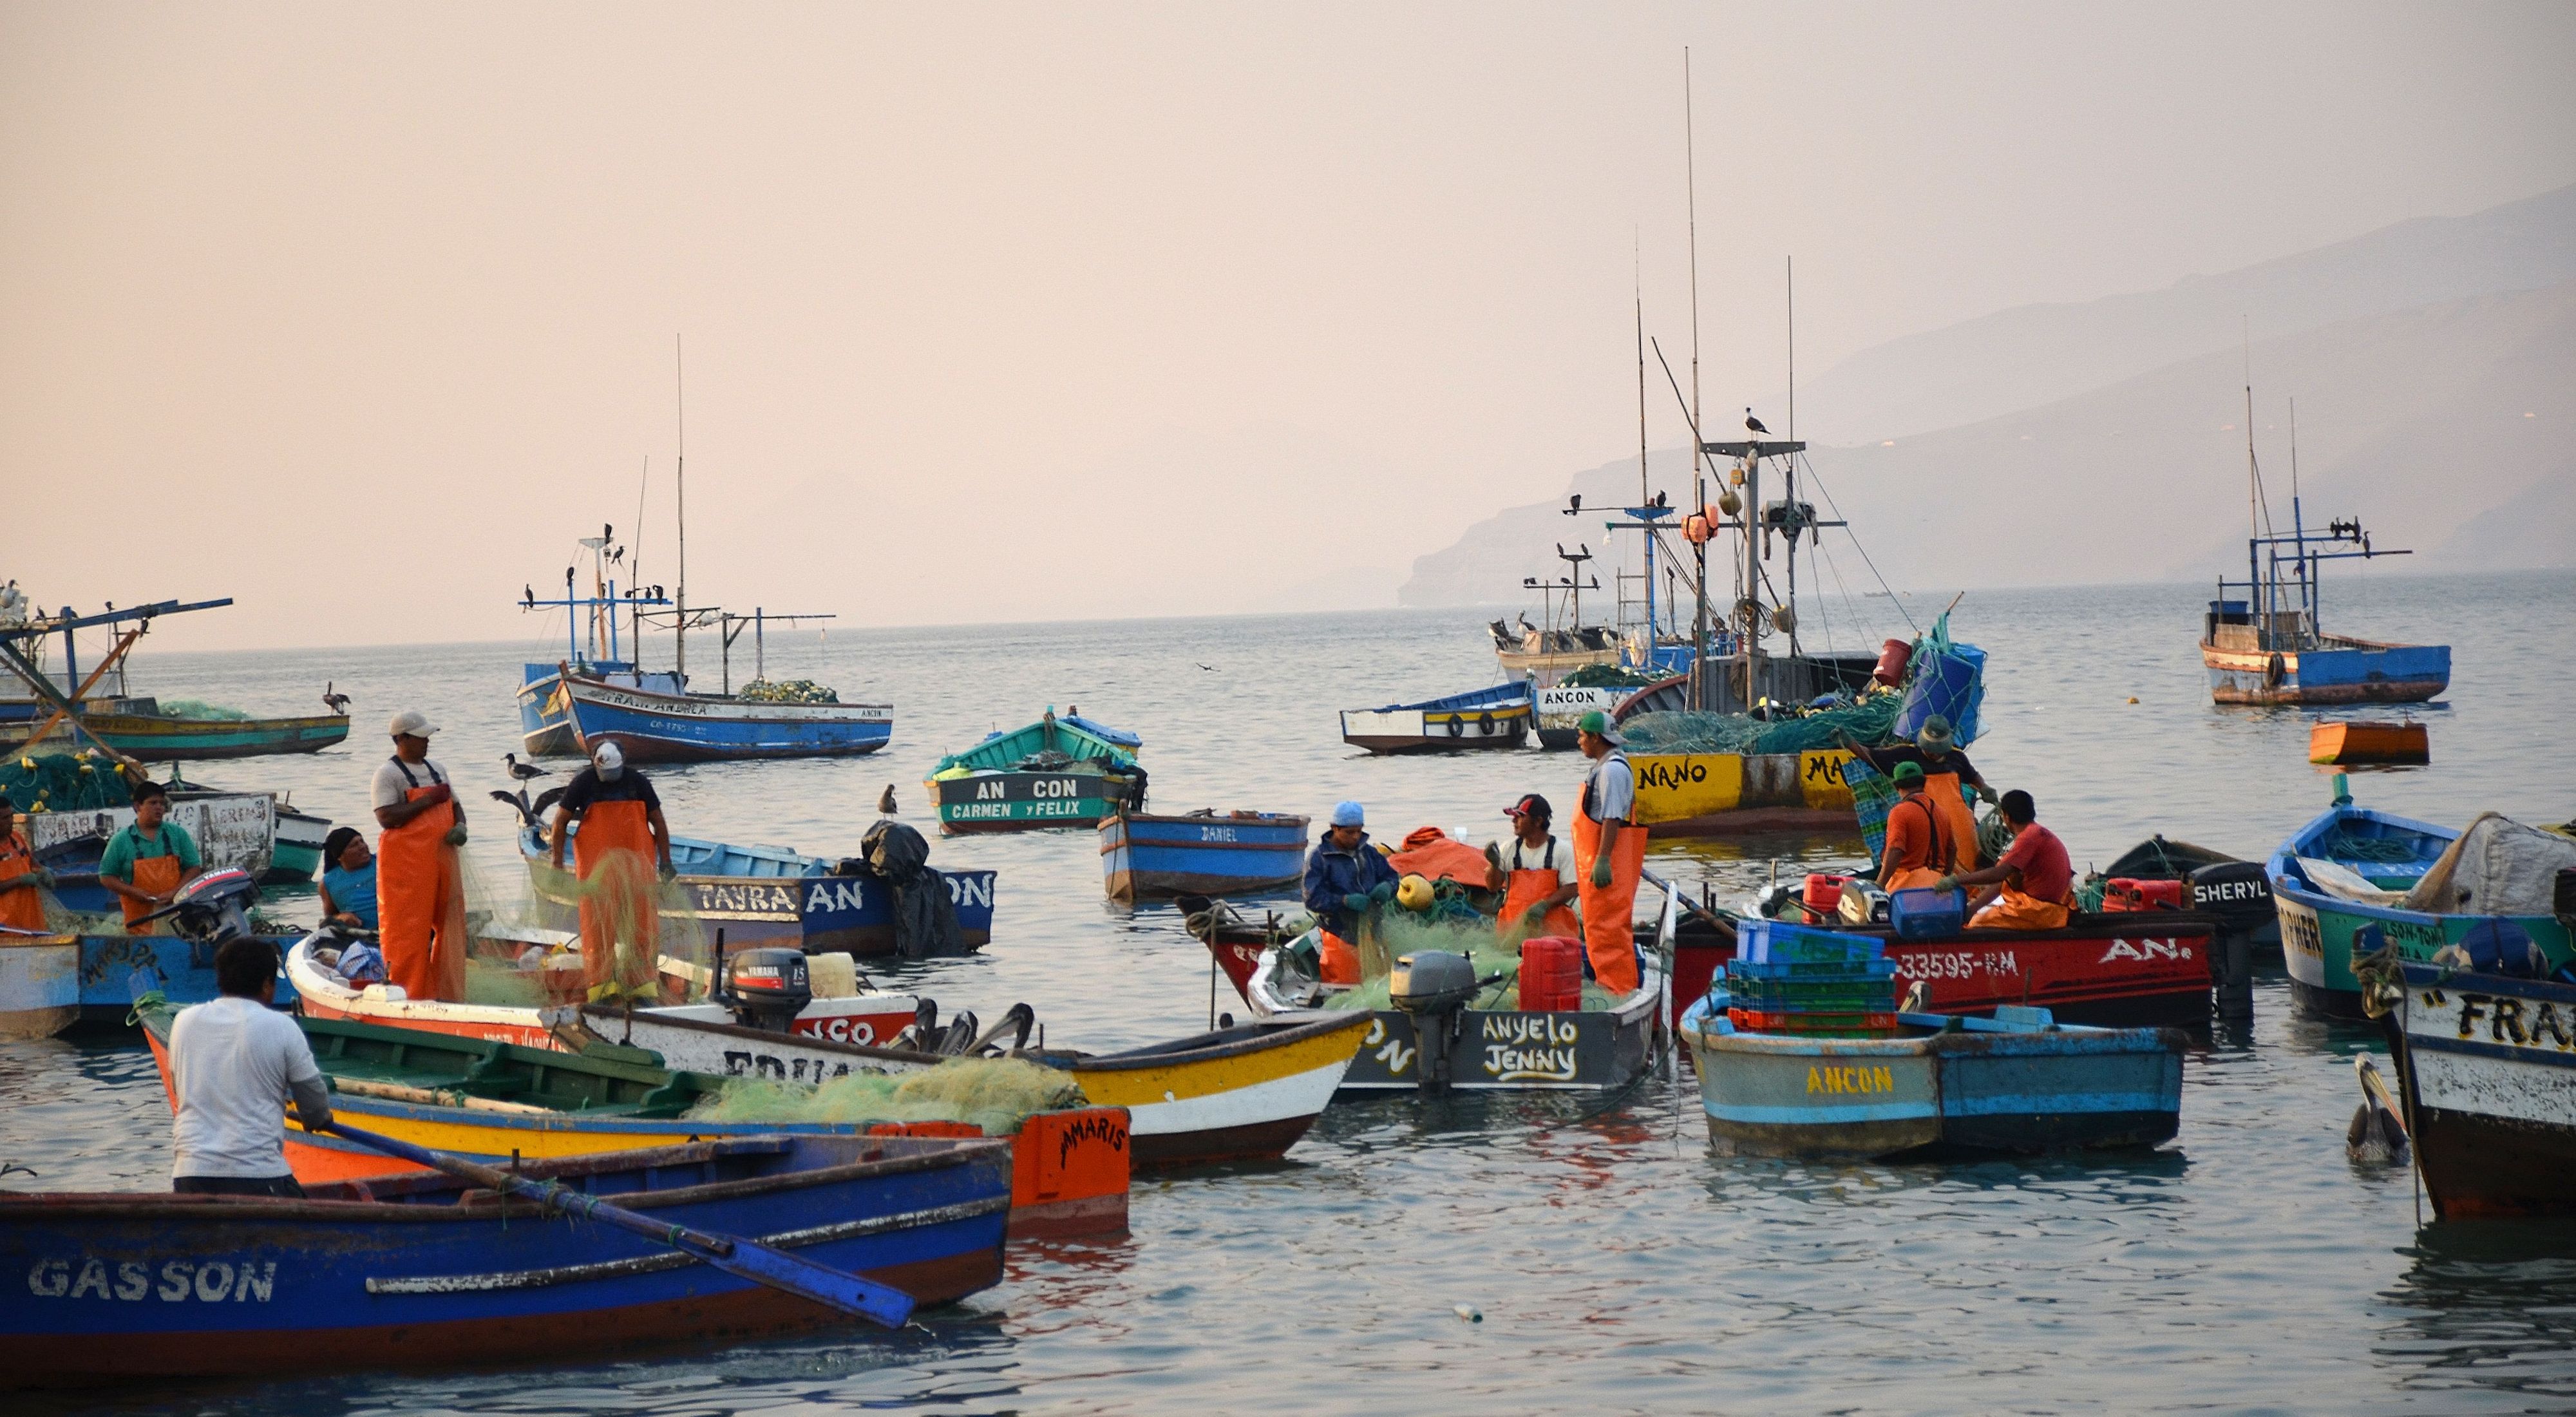 un grupo de pescadores en pequeños barcos pesqueros en el agua